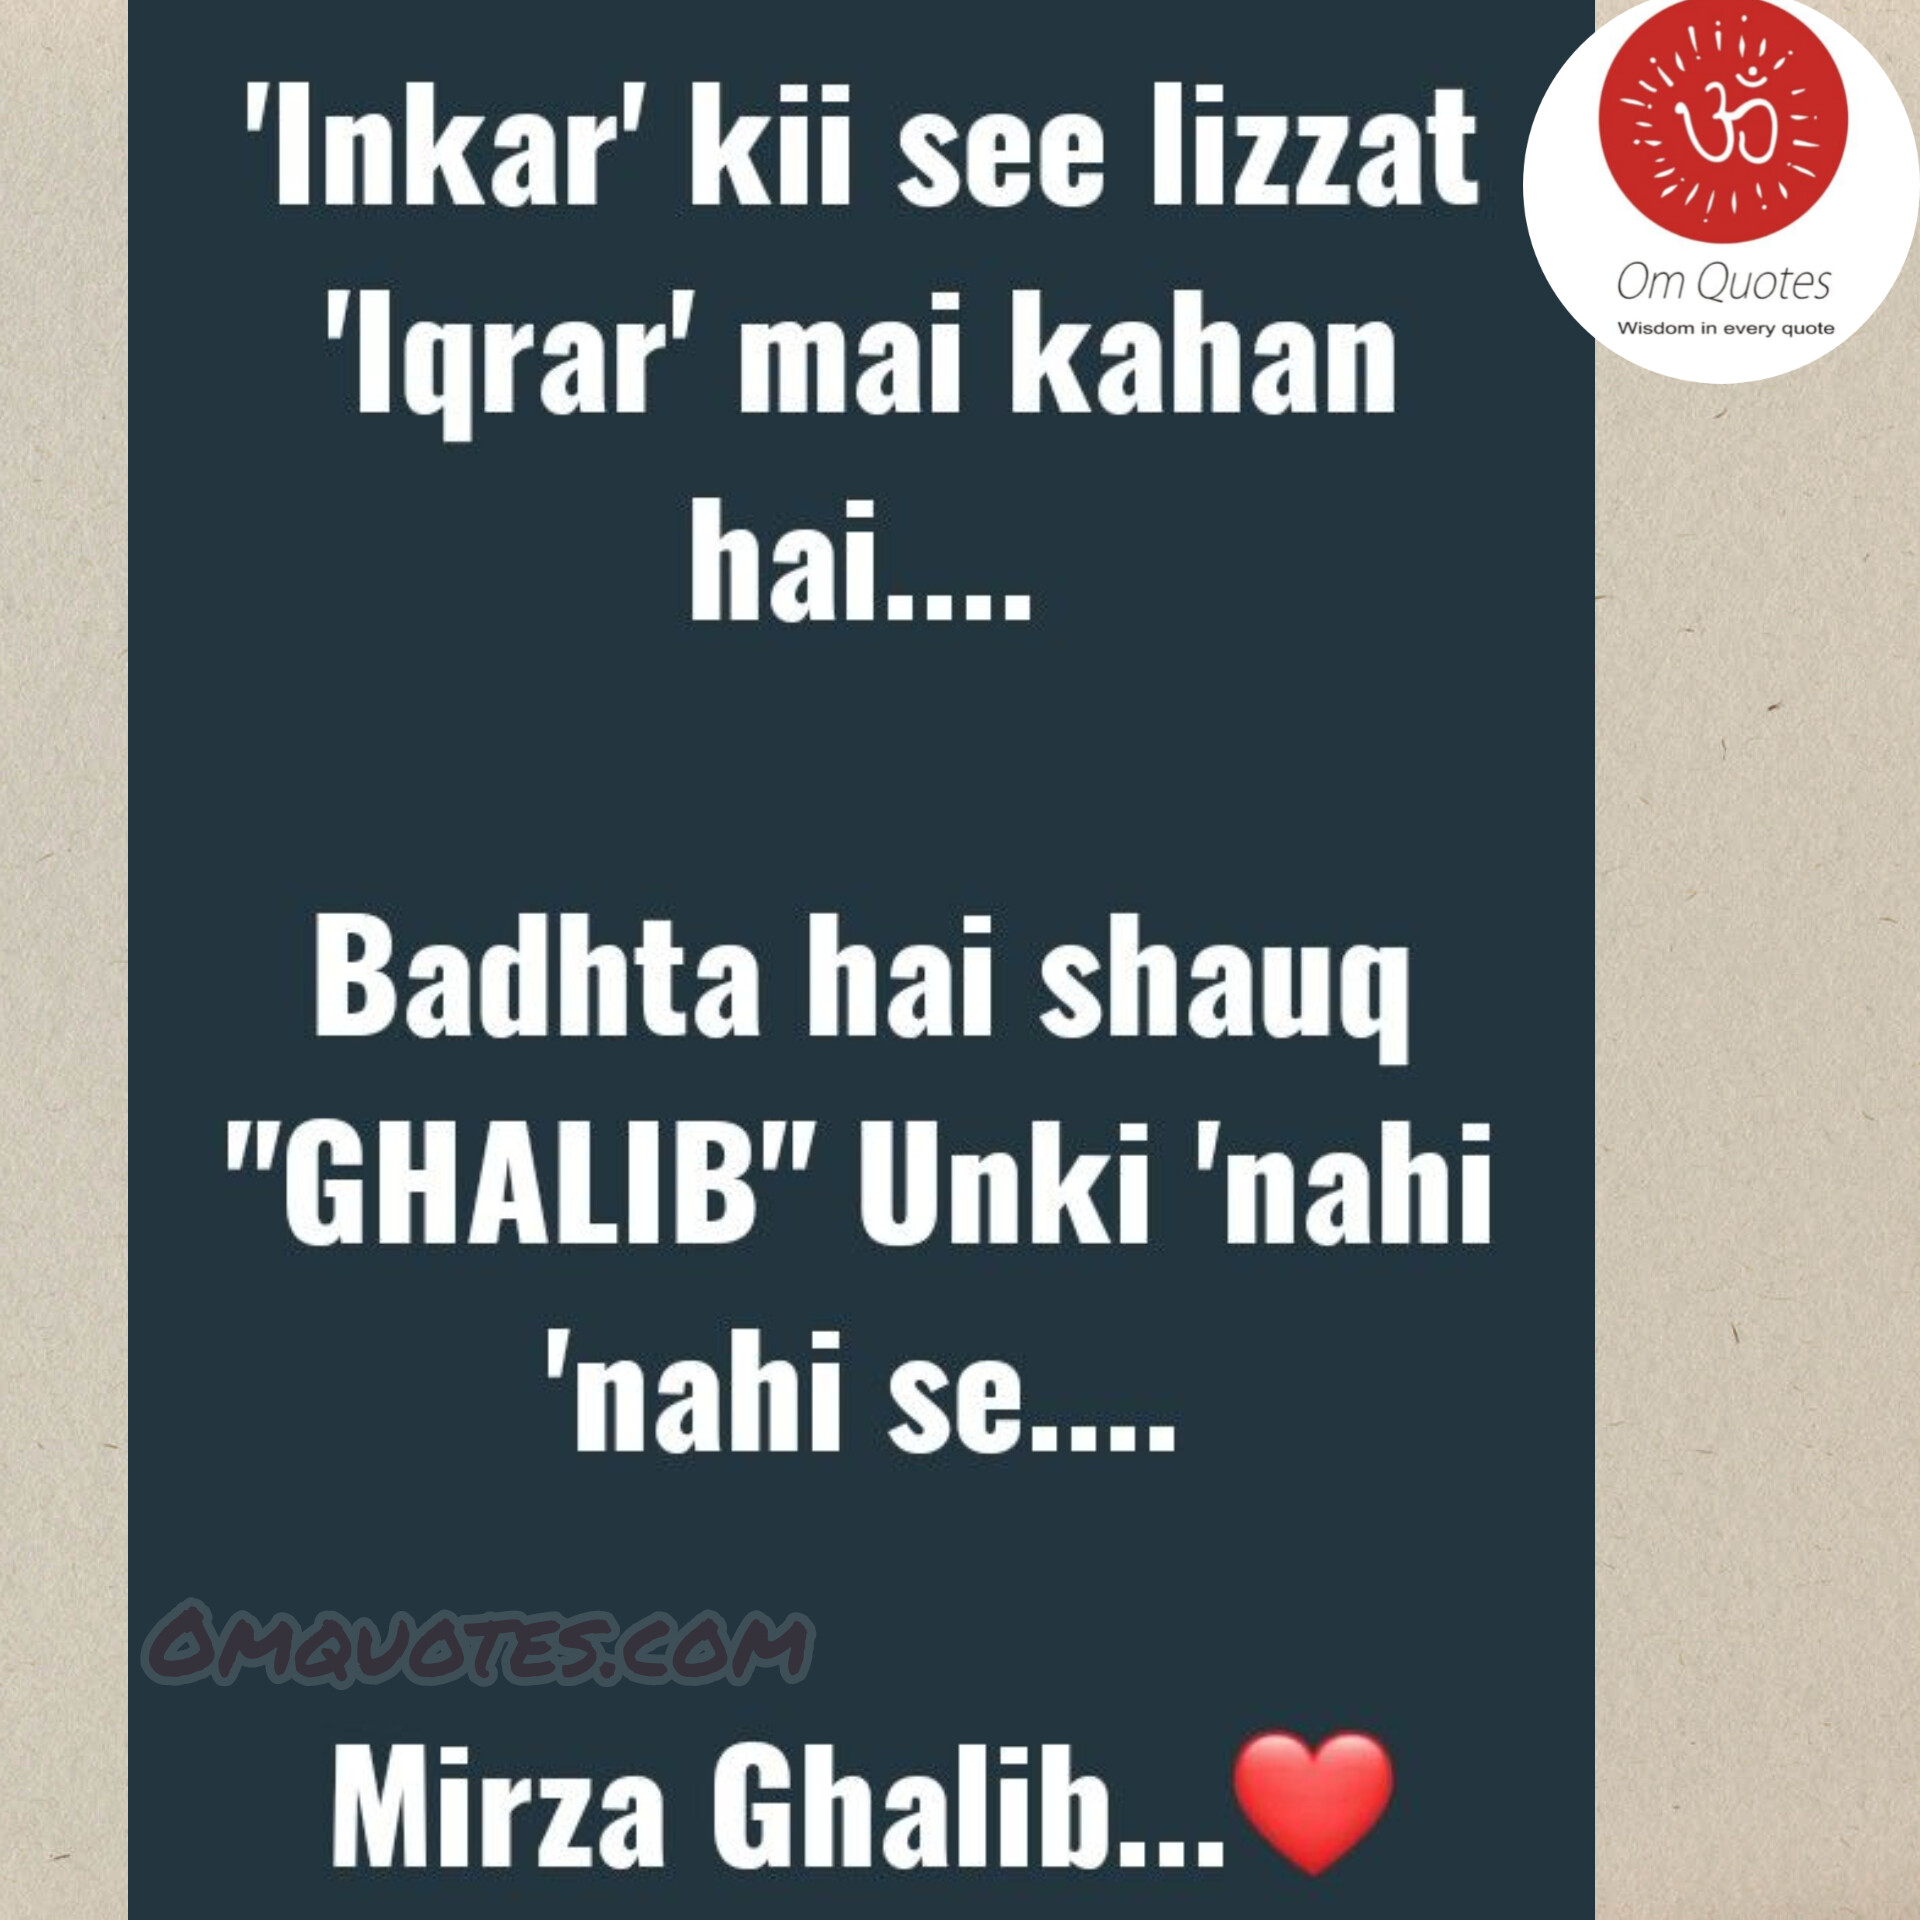 Mirza Ghalib quotes